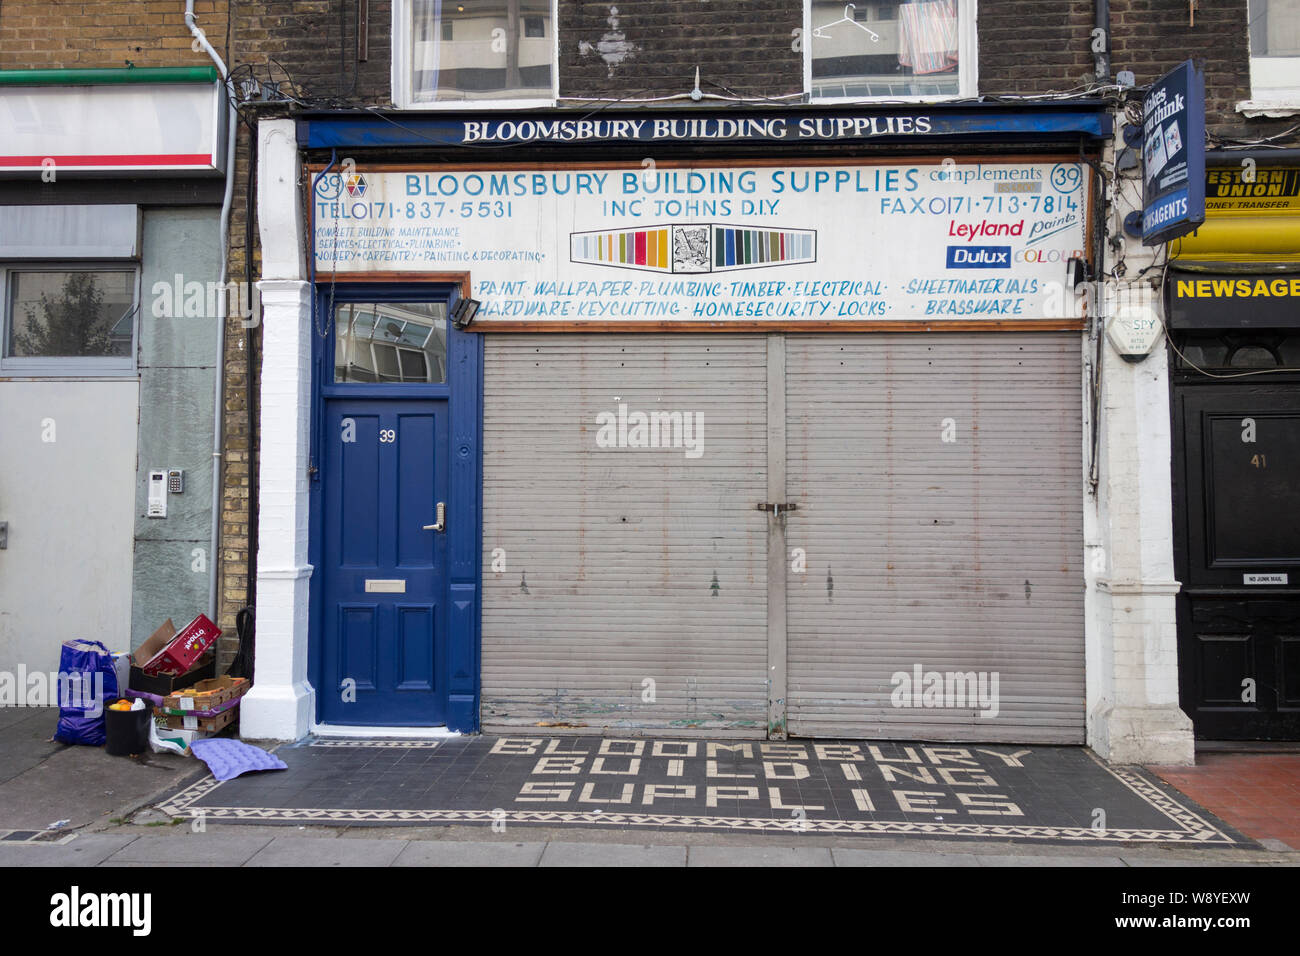 Bloomsbury Building Supplies shopfront on Marchmont, Street, Camden, London, WC1, UK Stock Photo